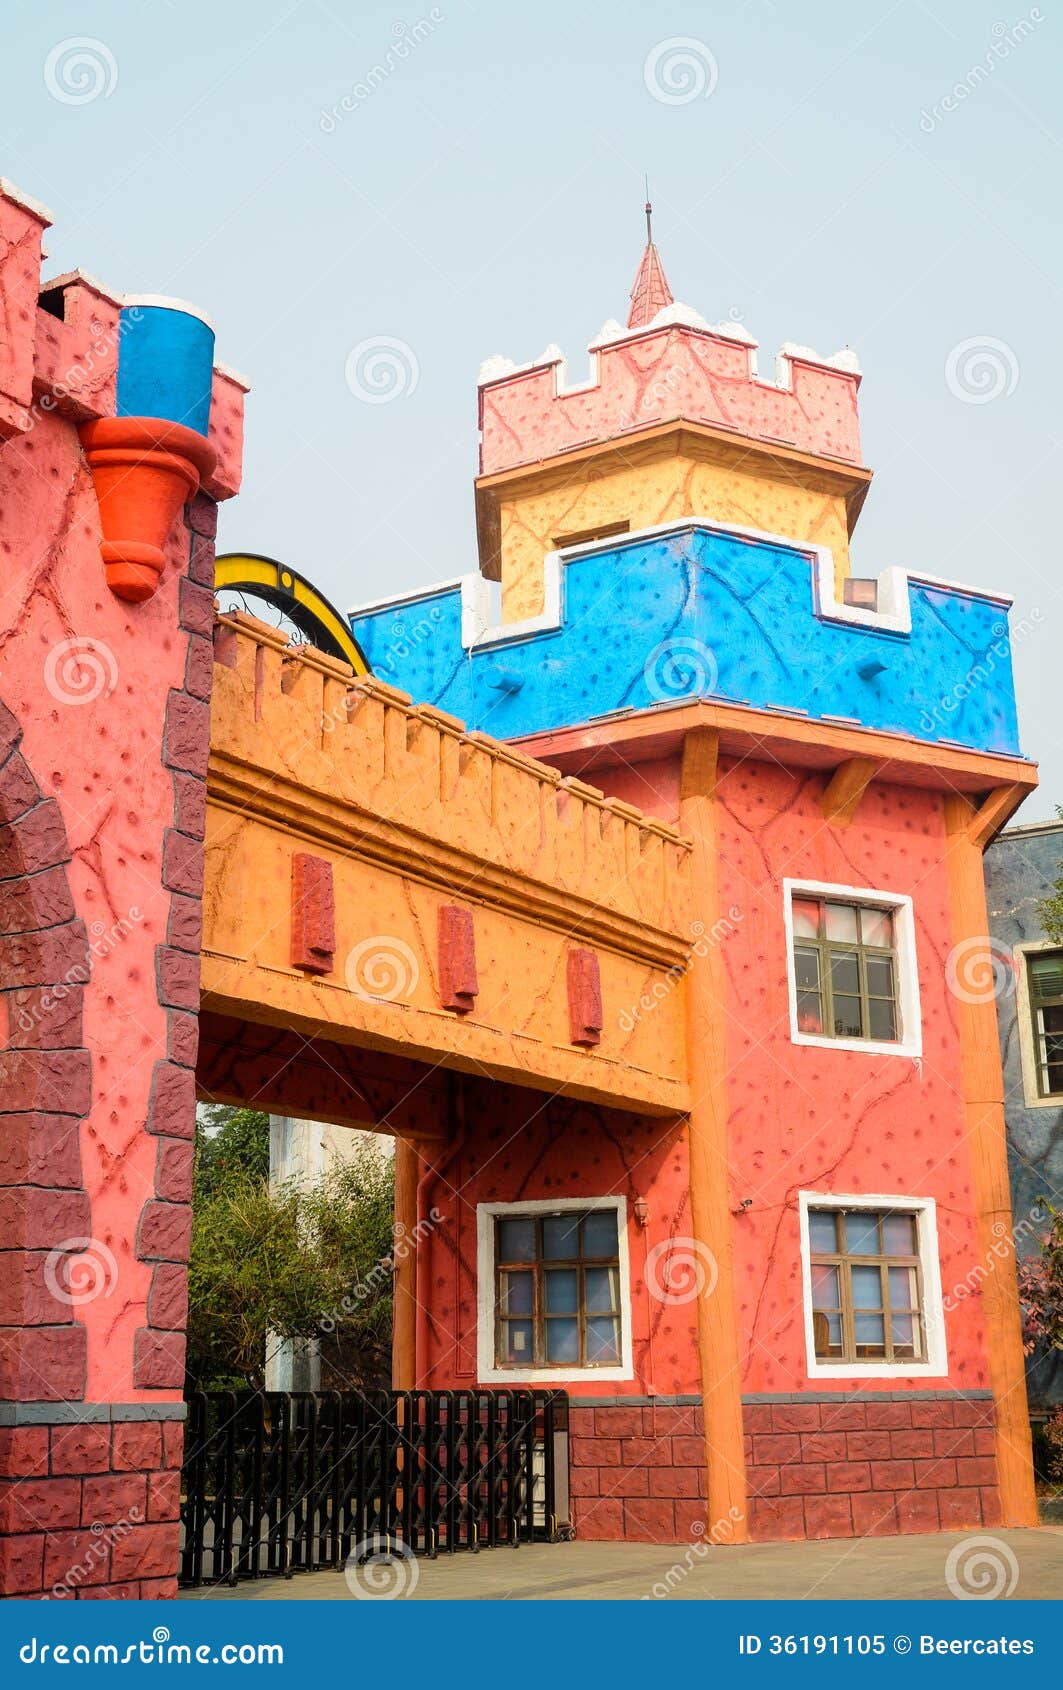 colorful cartooned building